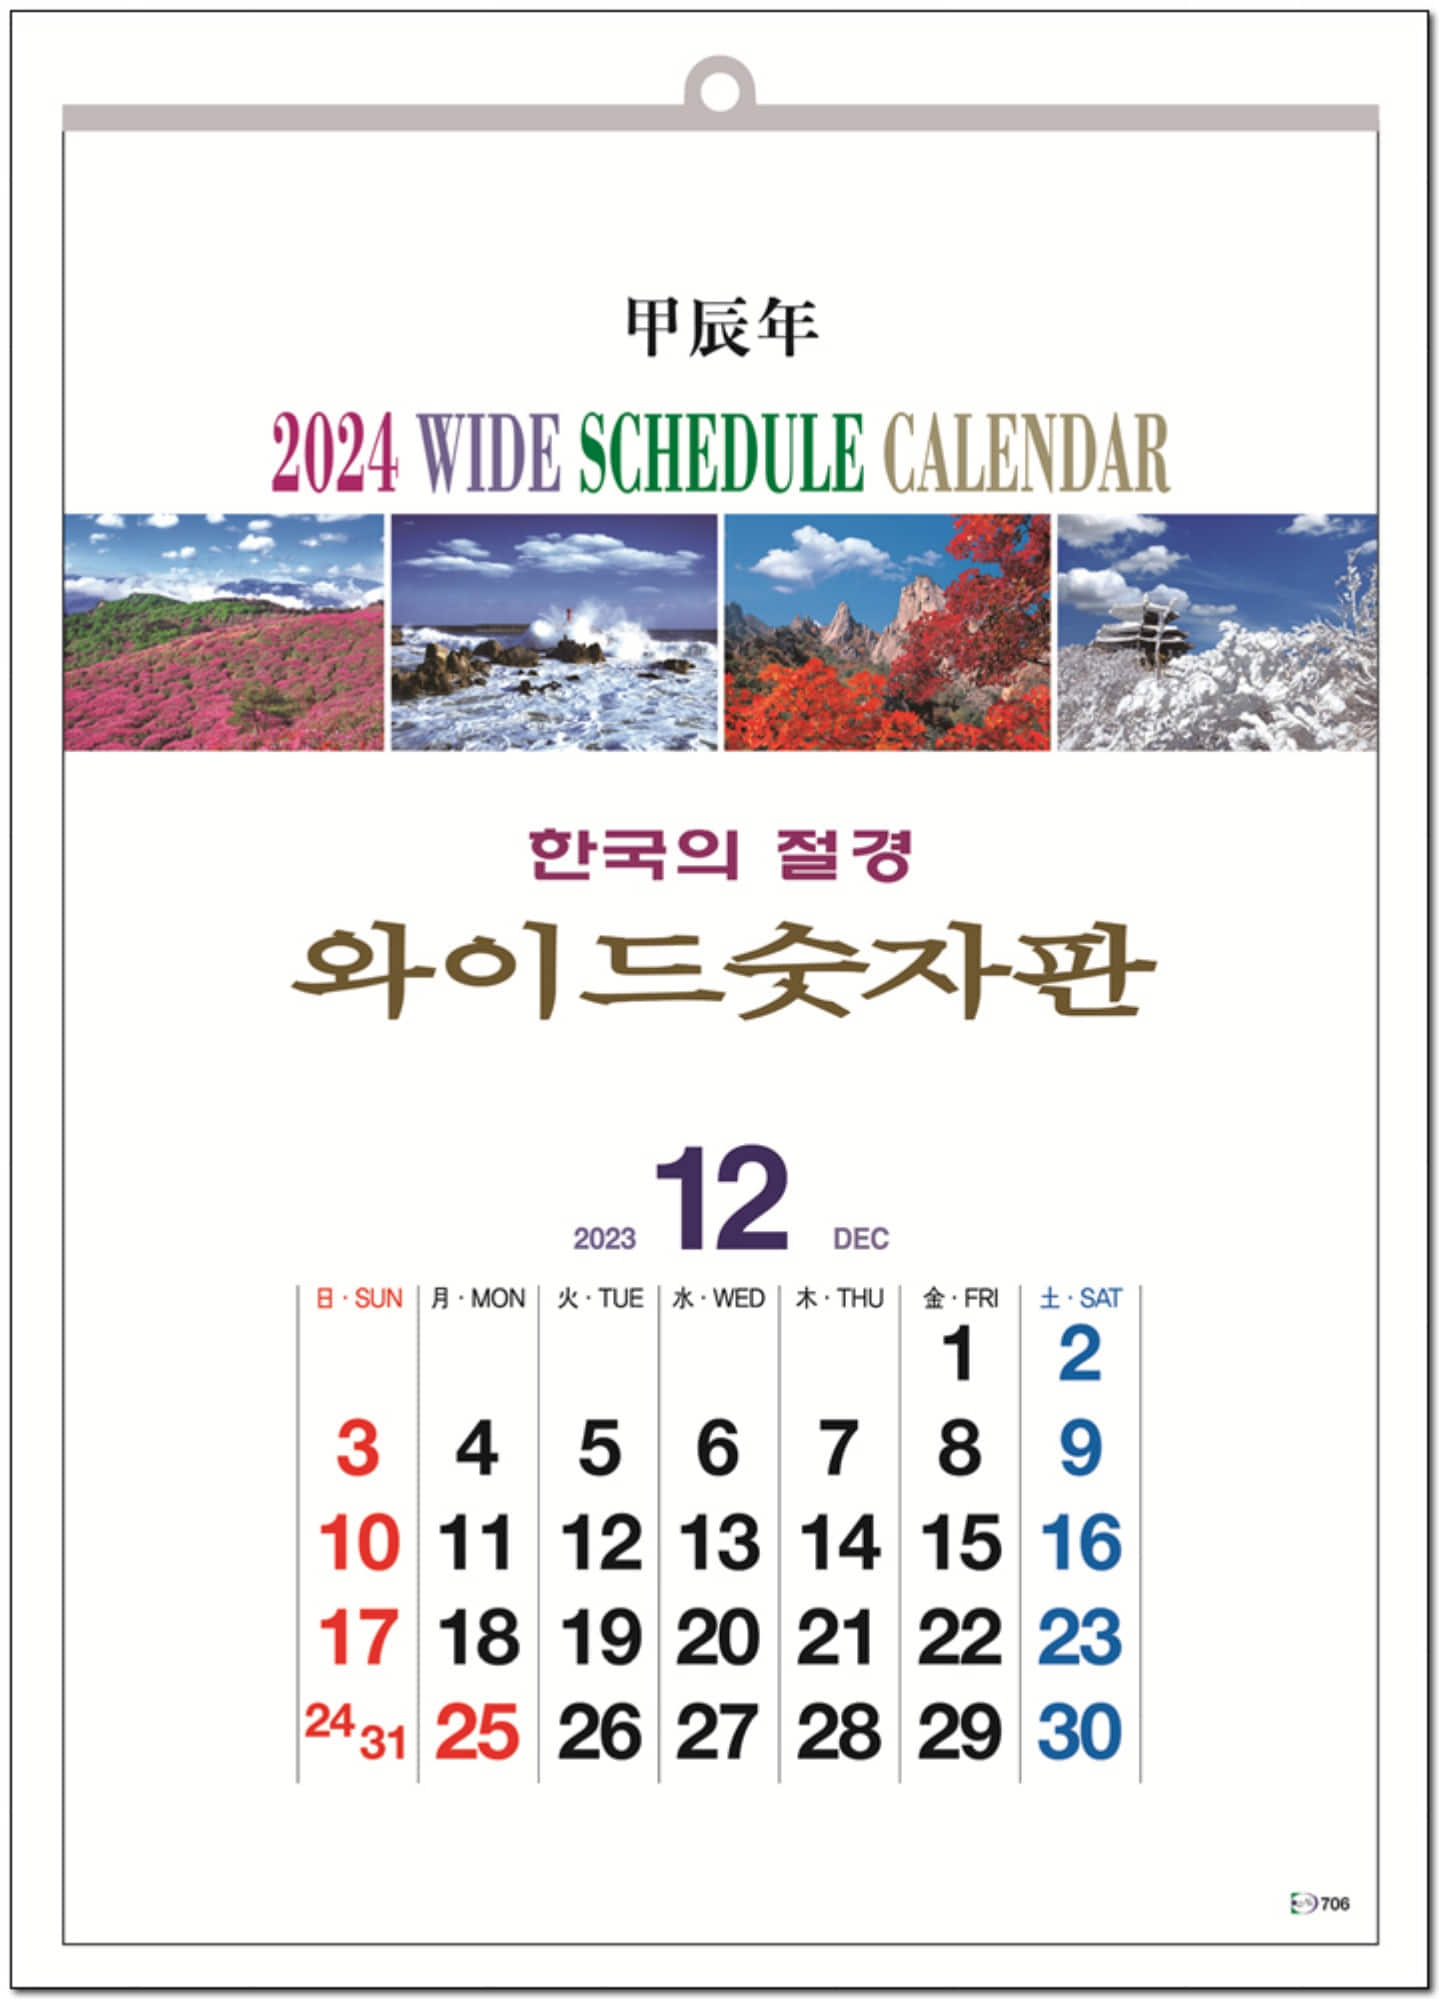 6-706 (B) 한국의 절경(와이드 숫자판) - 모조지